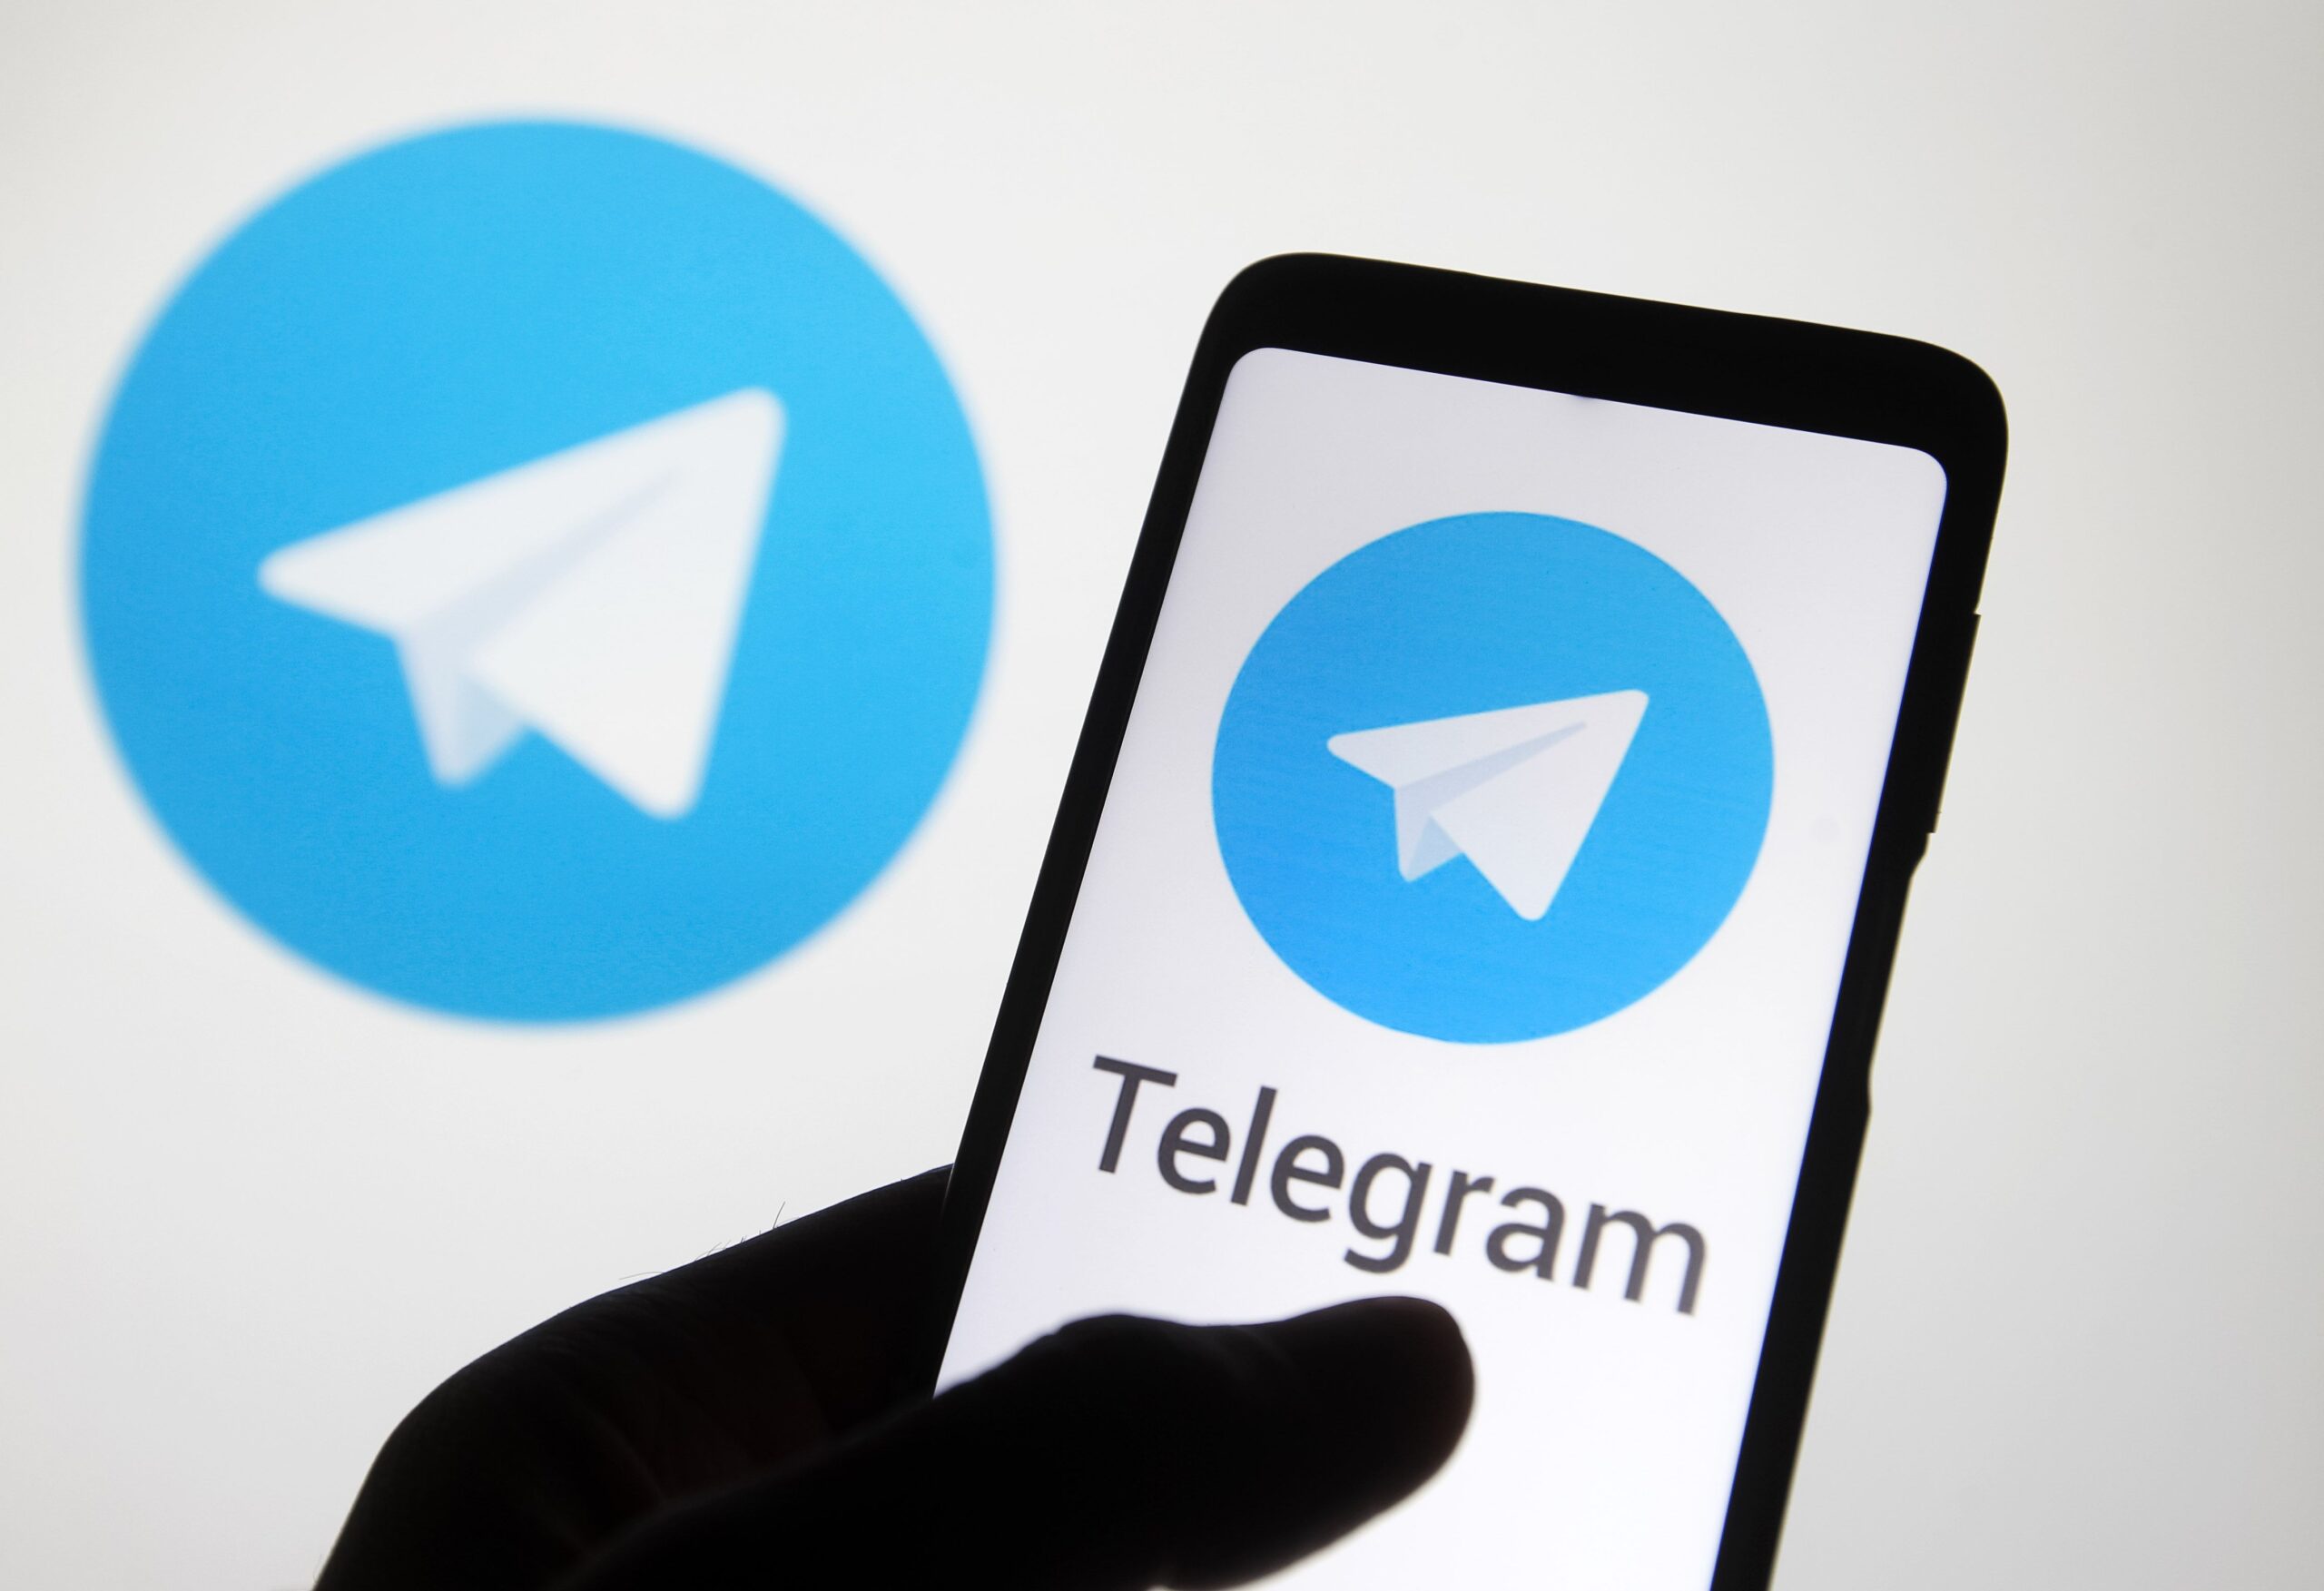 telegram apk uptodown